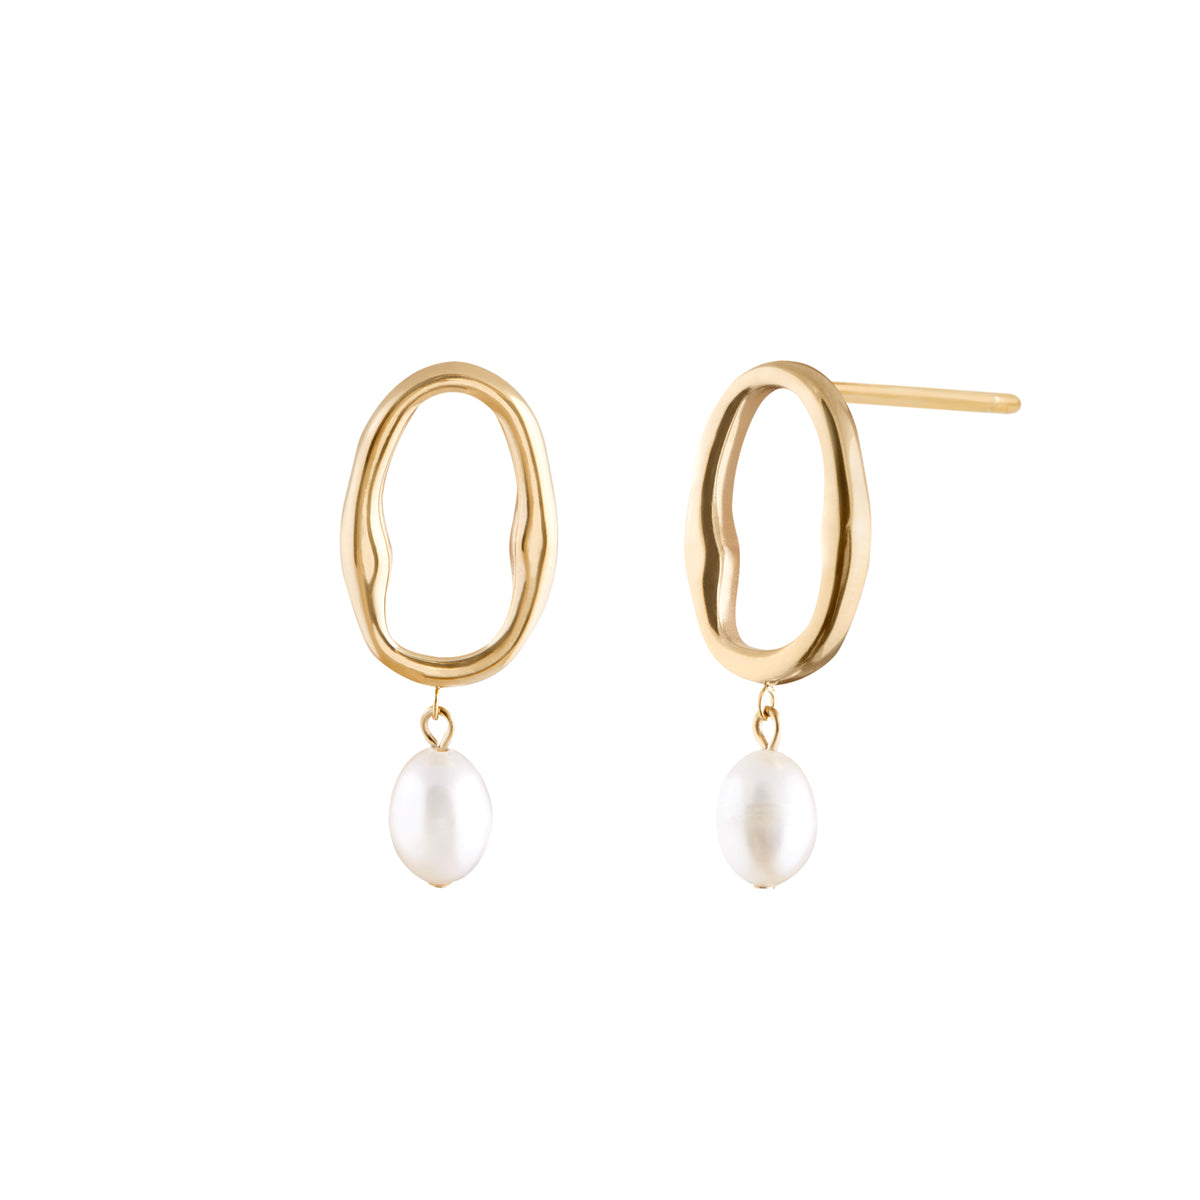 Dolce Vita Earrings - Gold